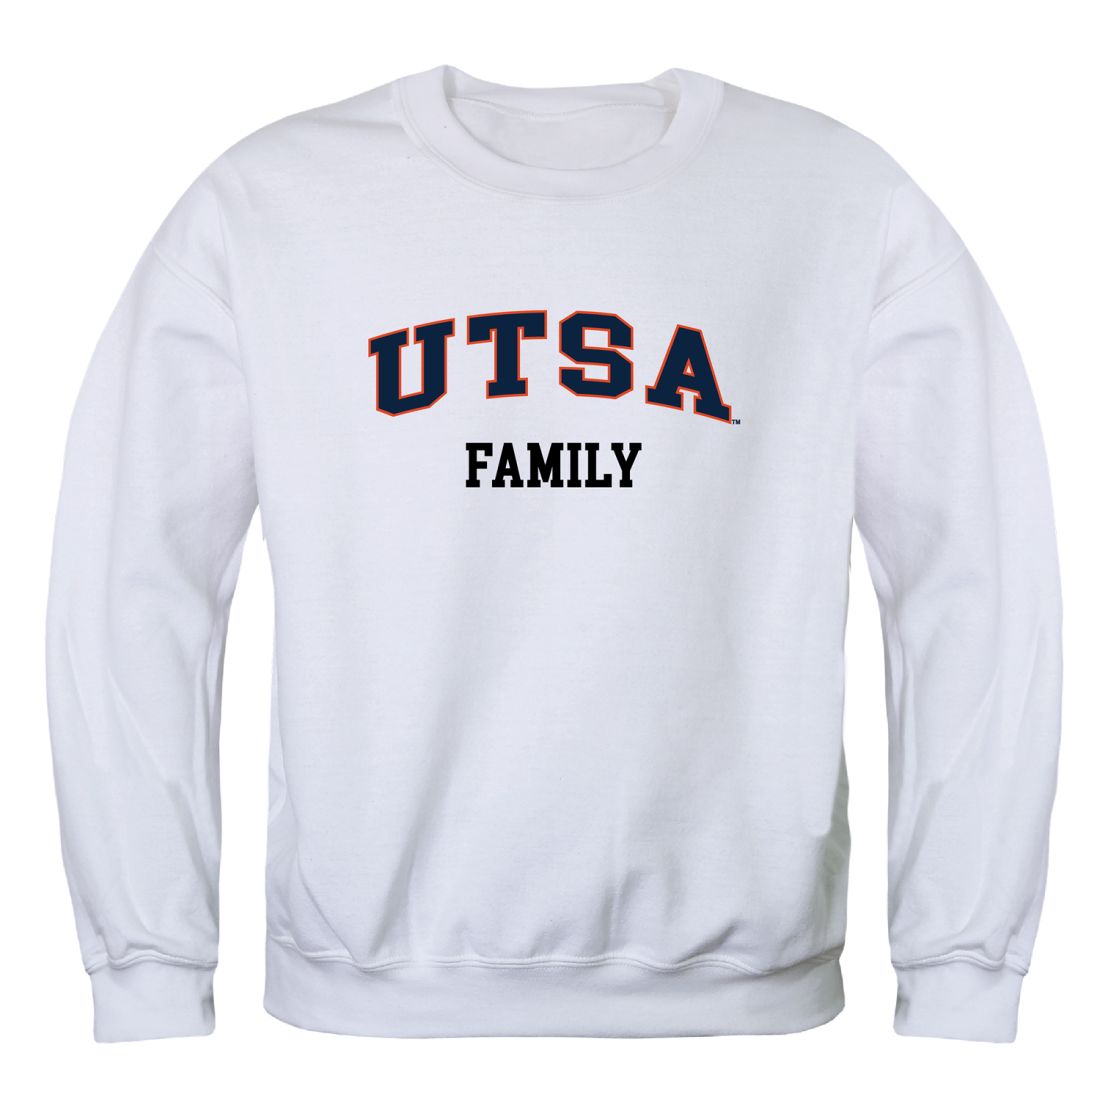 UTSA-University-of-Texas-at-San-Antonio-Roadrunners-Family-Fleece-Crewneck-Pullover-Sweatshirt